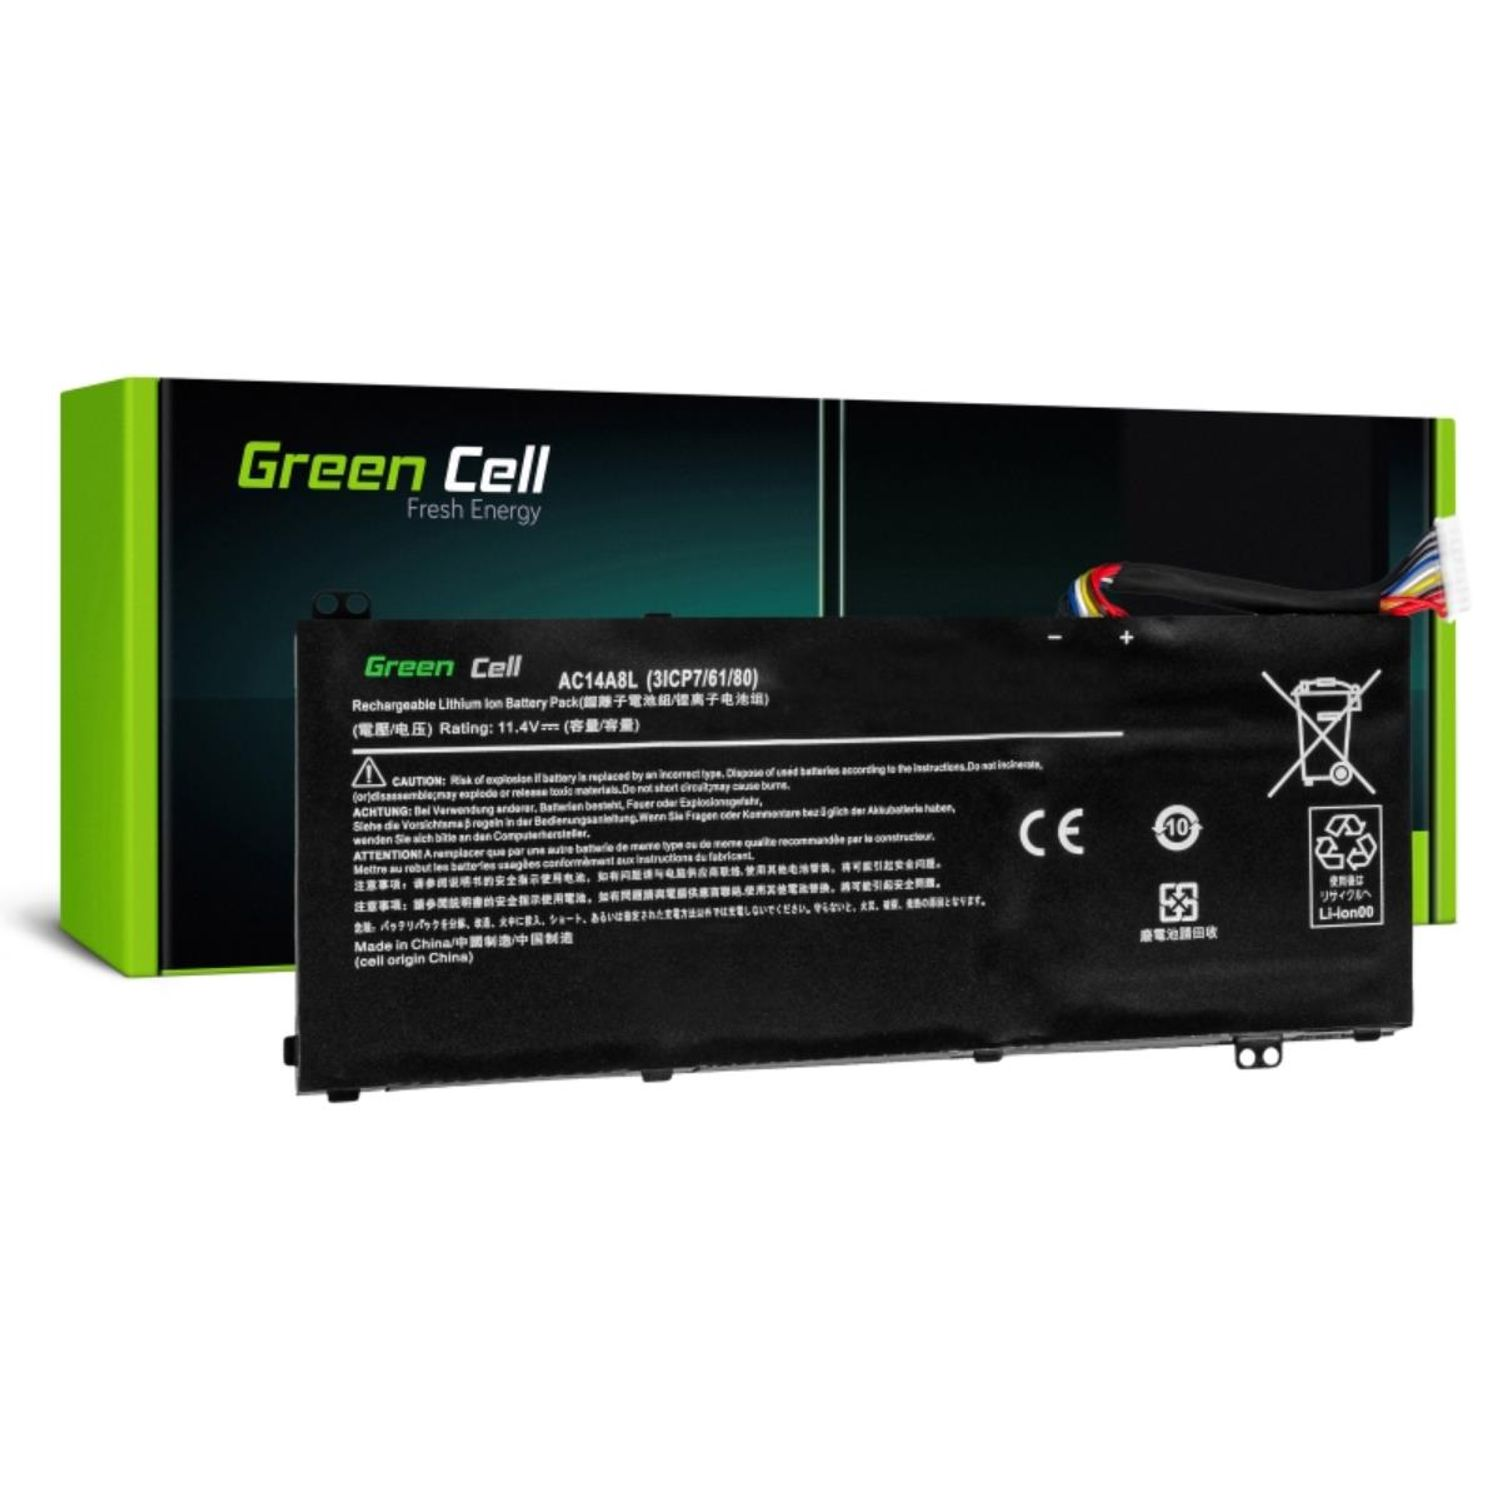 GREEN CELL Laptop mAh AC14A8L Akku, Aspire Akku Nitro Lithium-Ionen-Akku Batterien VN7-571G / Acer